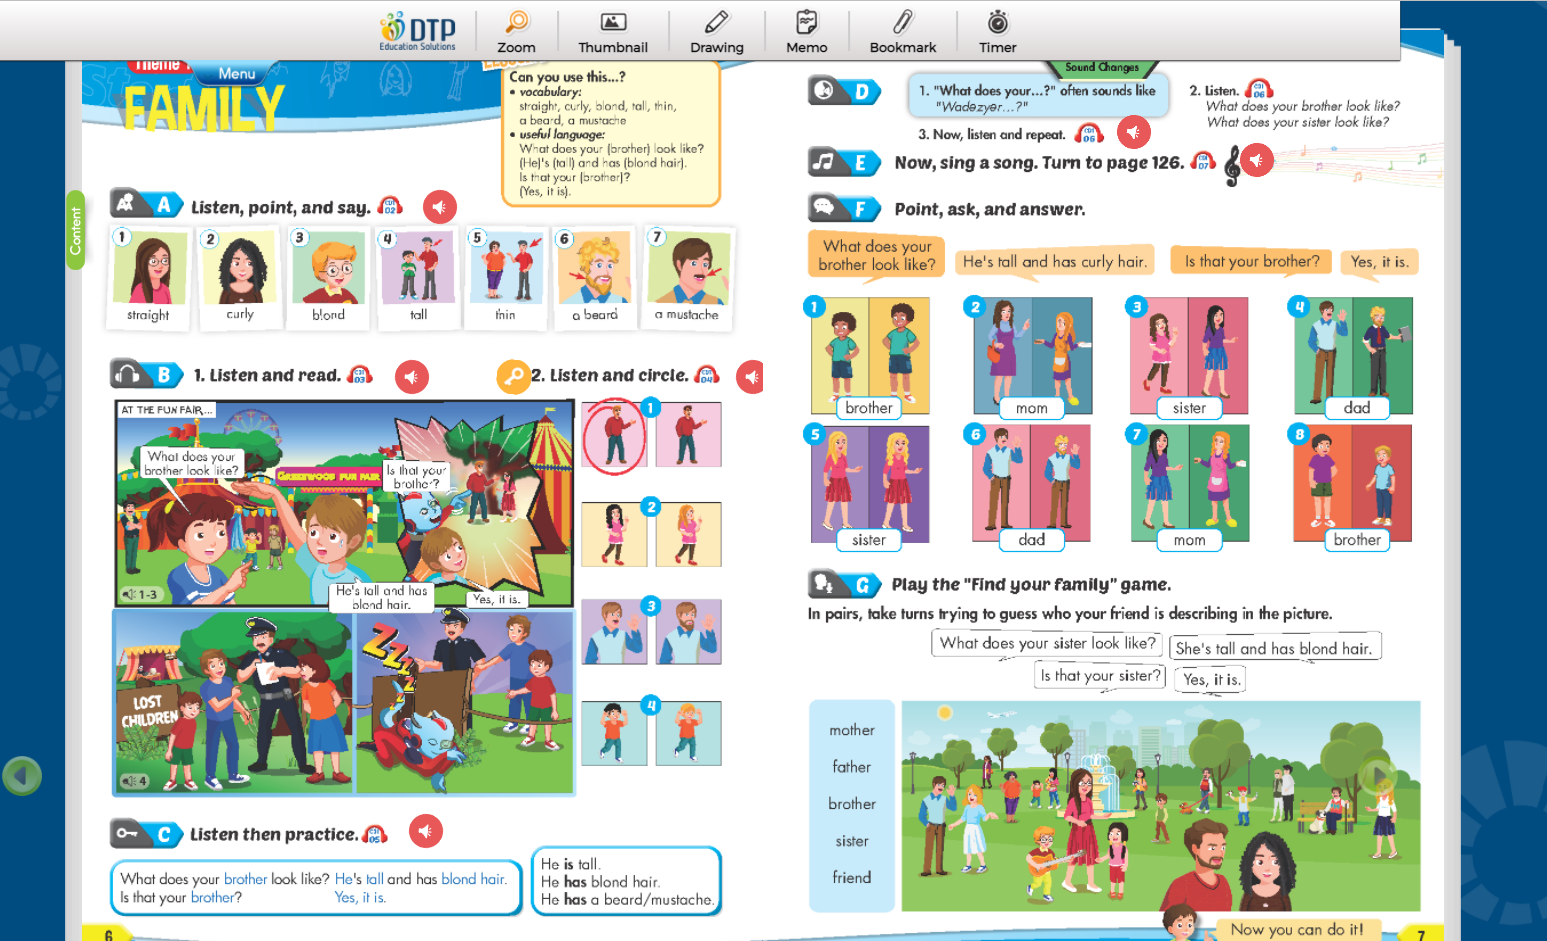 [E-BOOK] i-Learn Smart Start Special Edition 4 Sách mềm sách học sinh